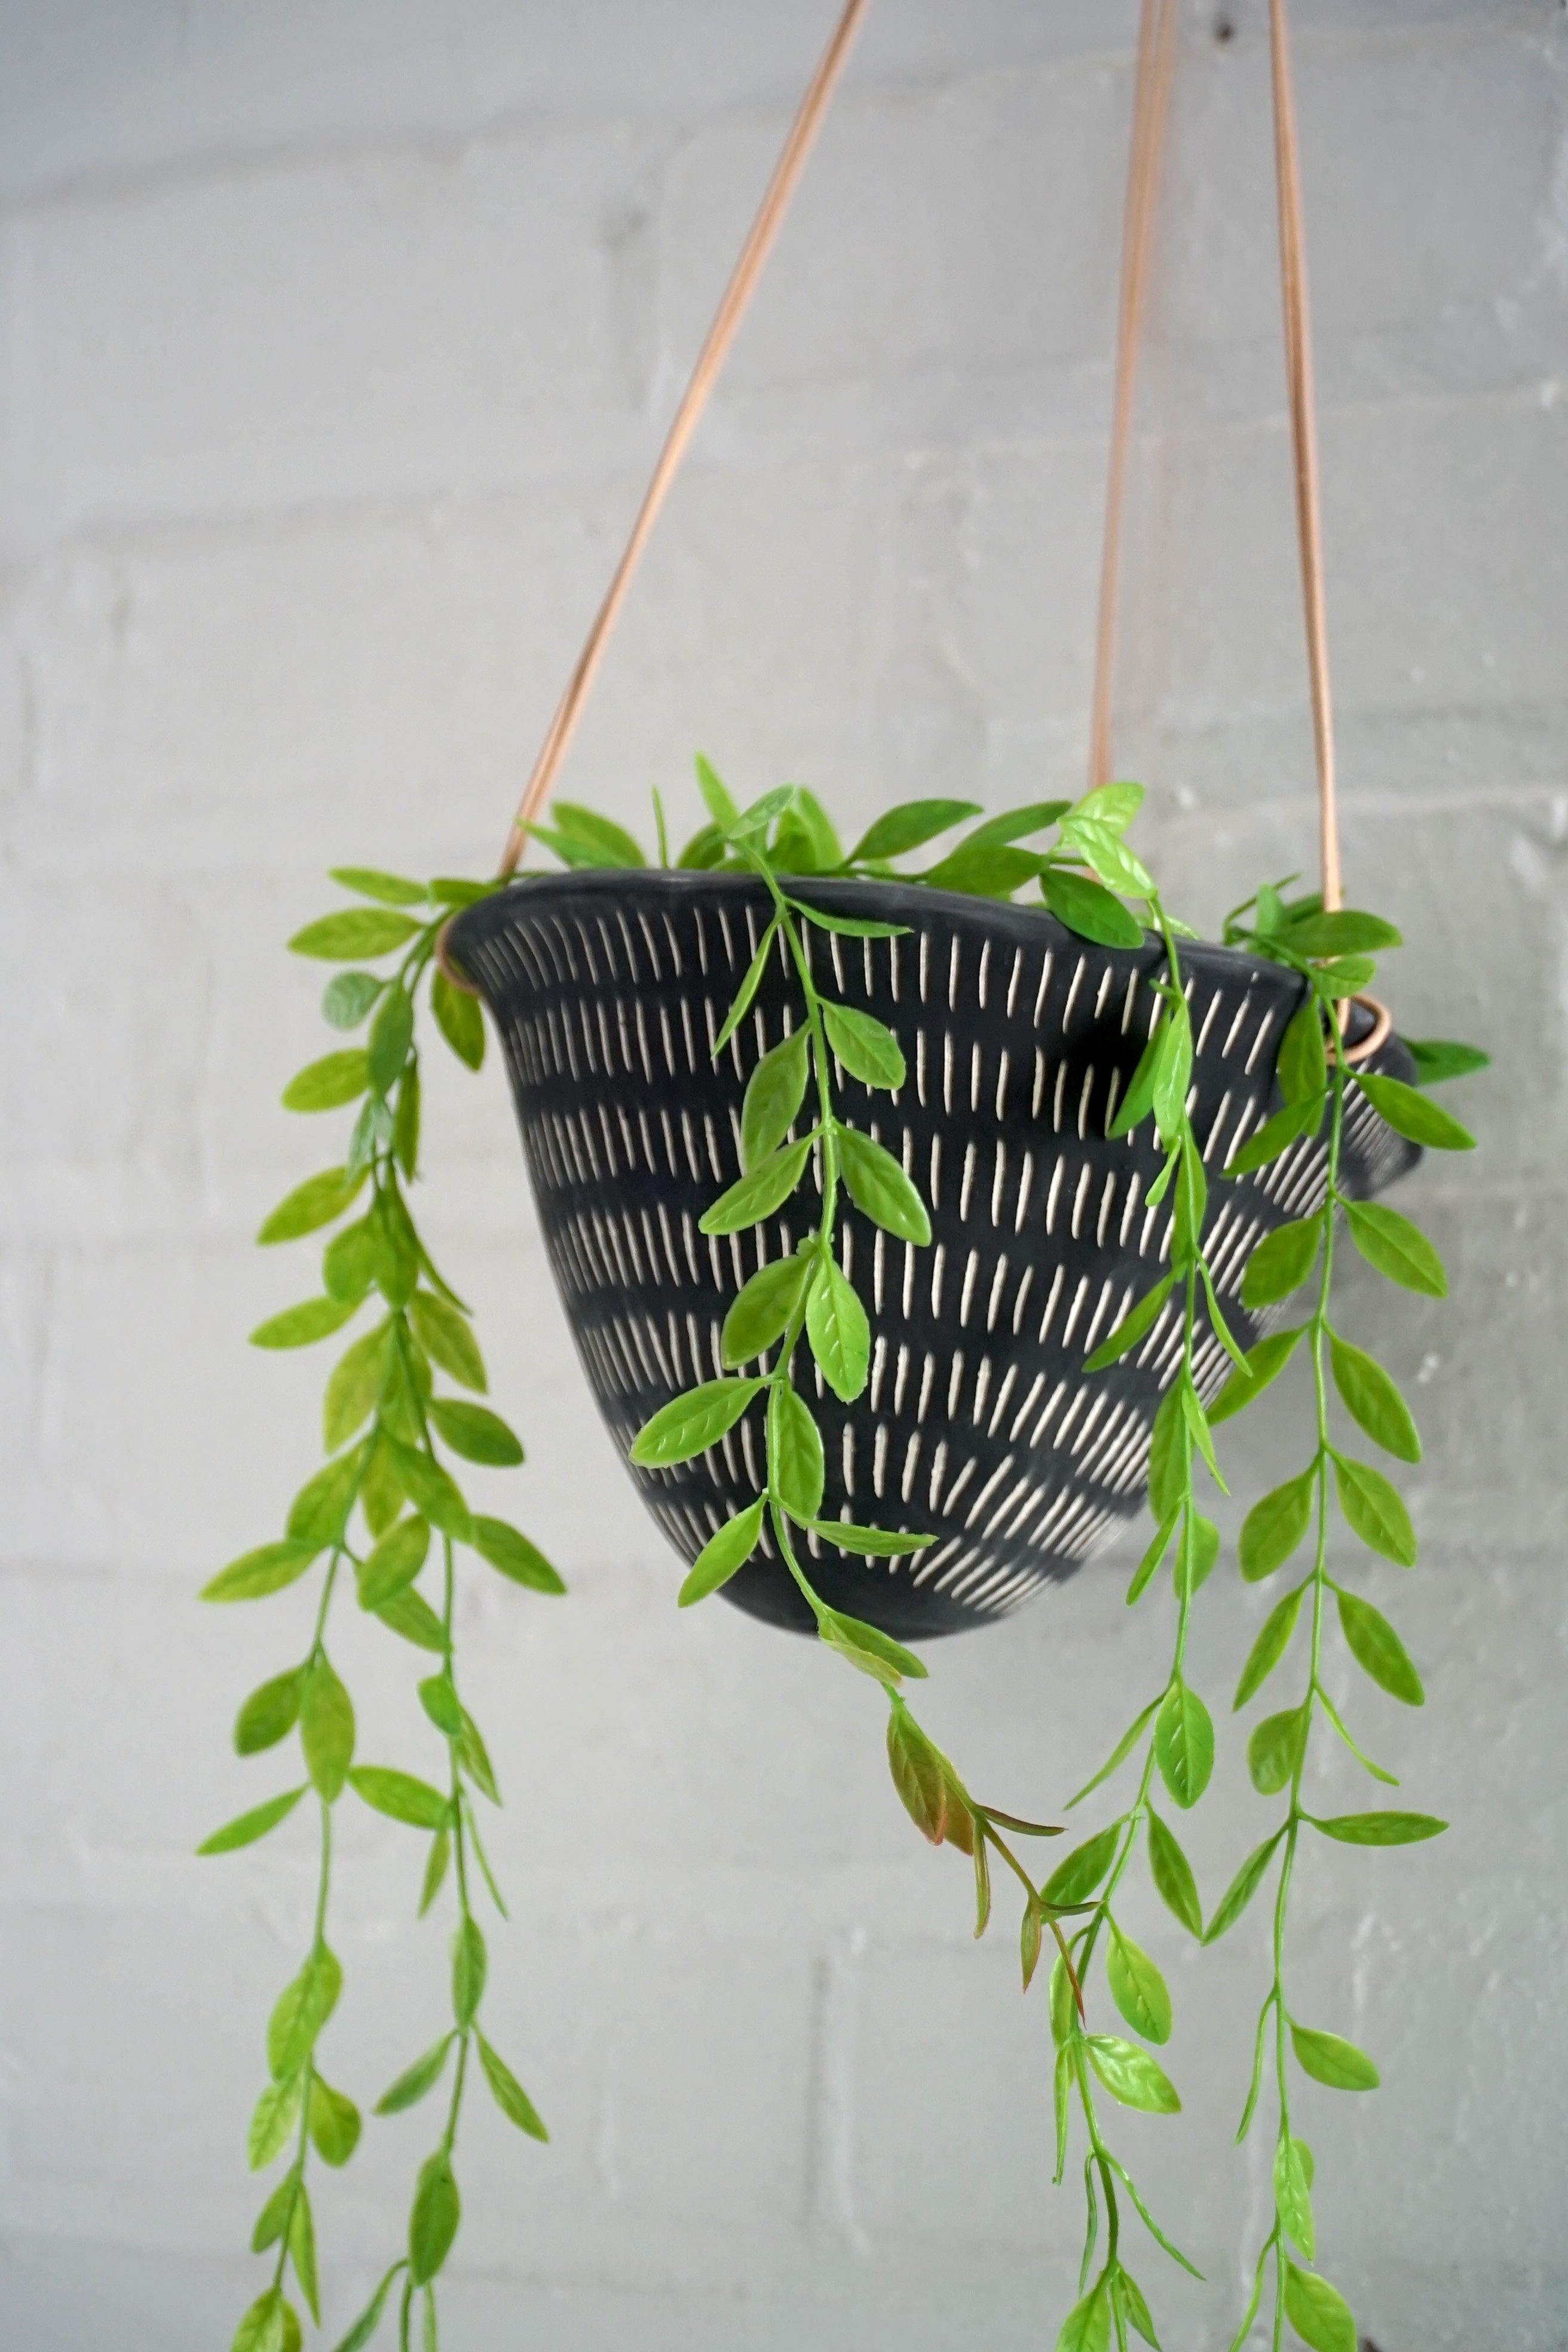 Black & White Hanging Planter w/ "Dash" Design - Hanging Pot with Carved Design - Succulent, Cactus, Herb, Air Plant, Etc - Housewarming